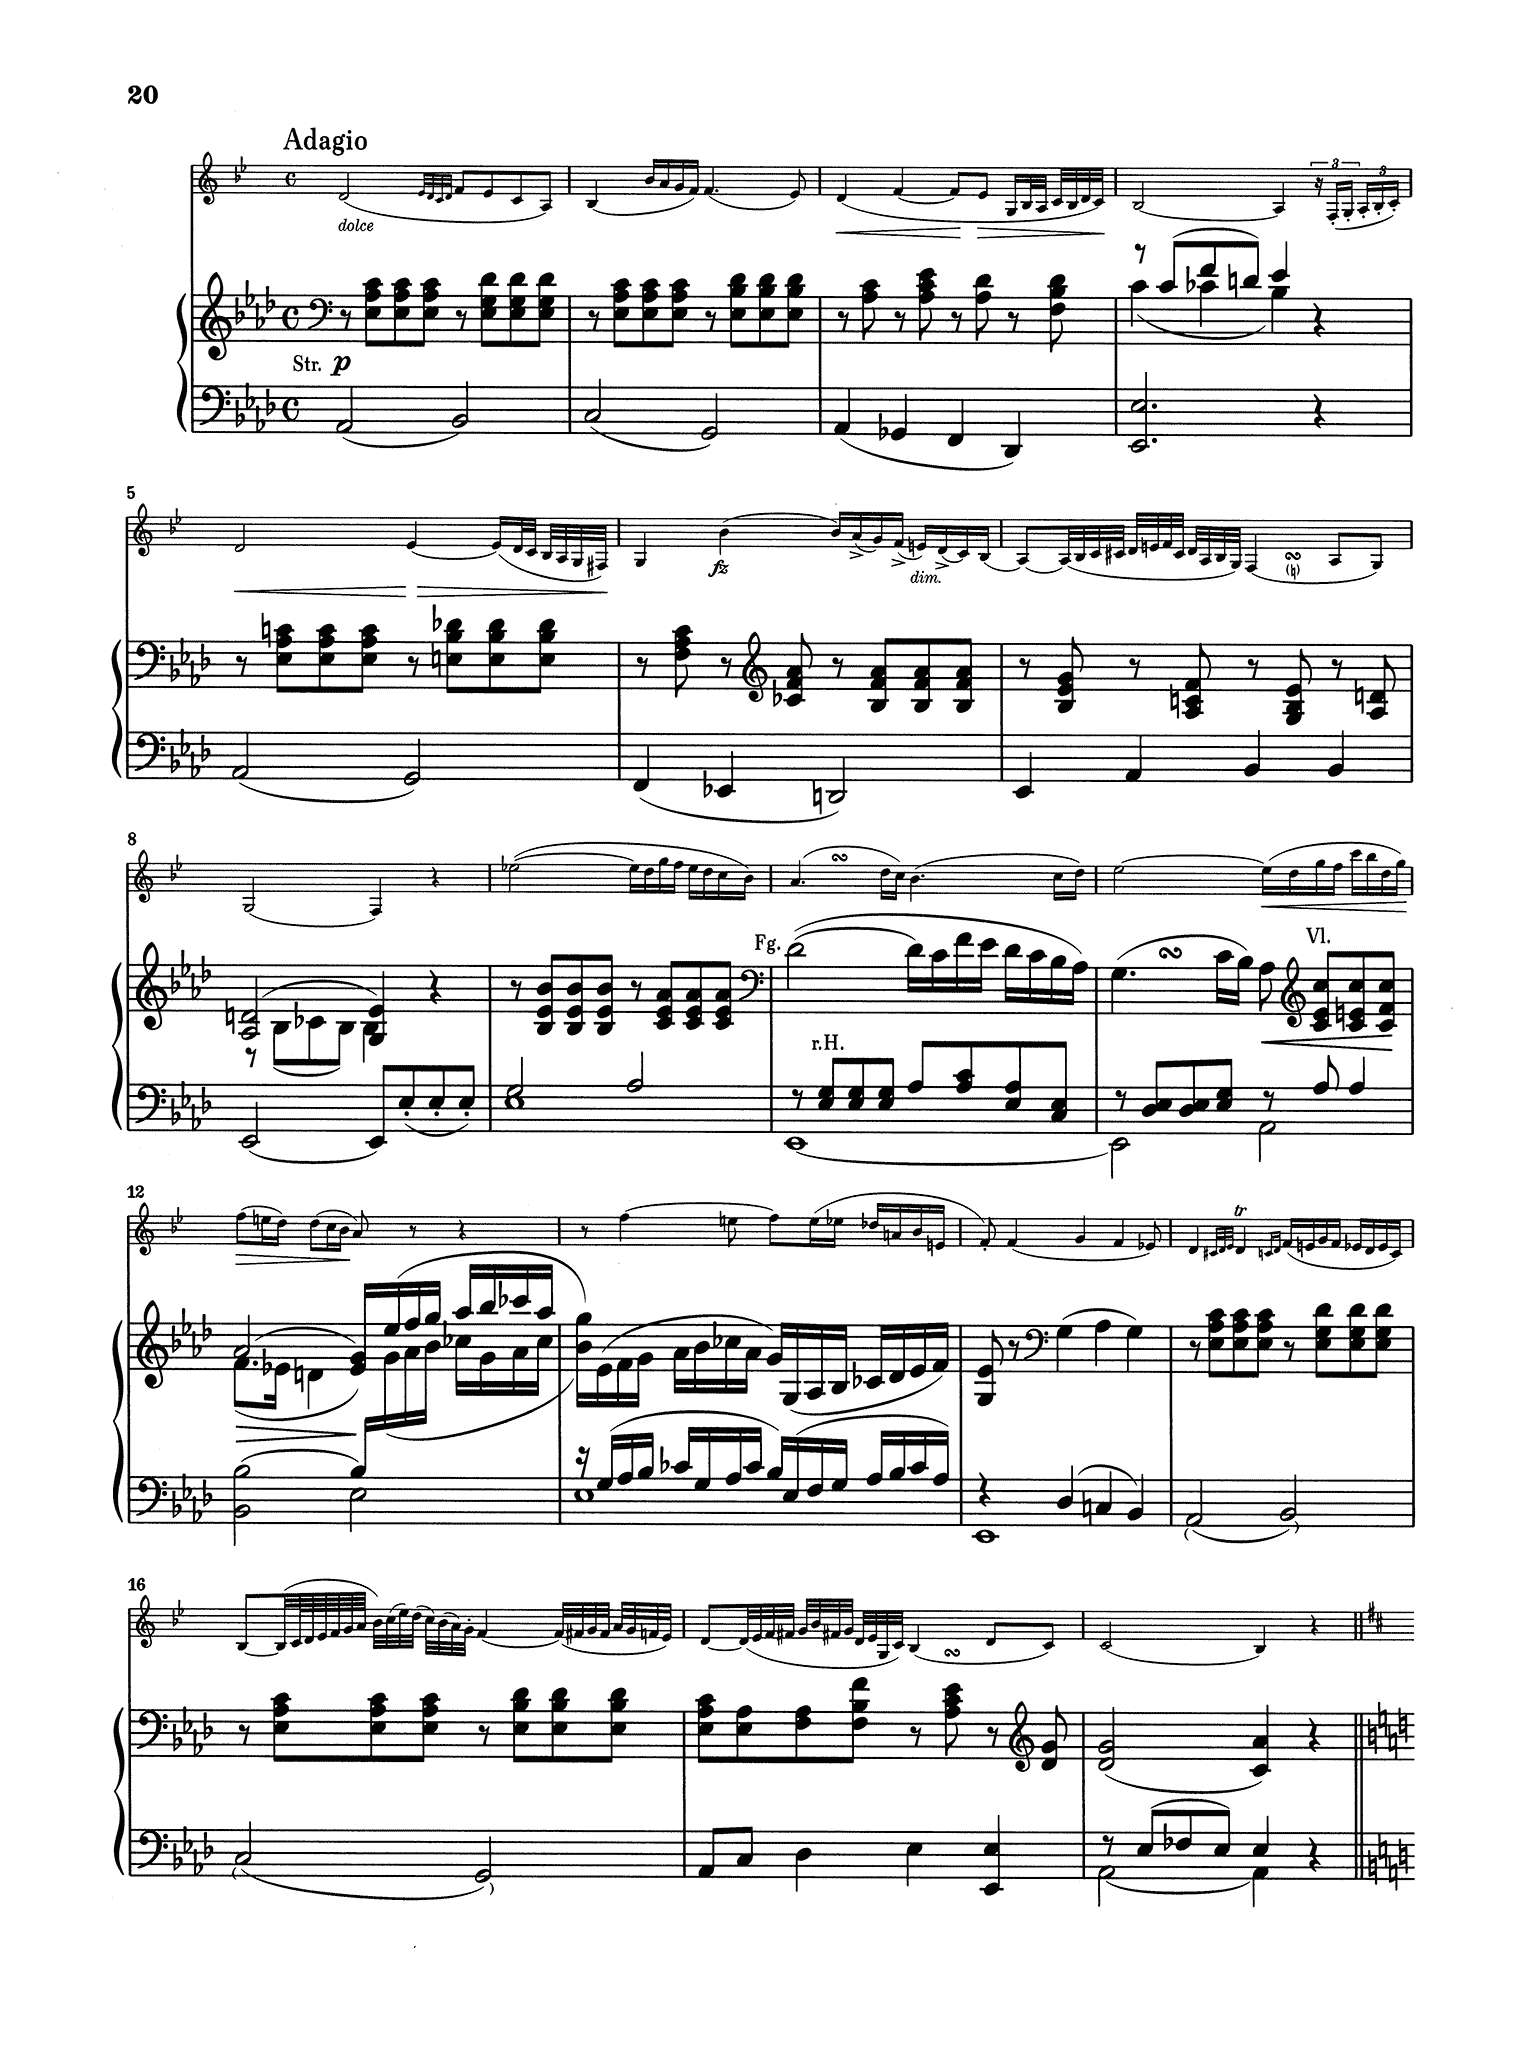 Clarinet Concerto No. 2 in E-flat Major, Op. 57 - Movement 2